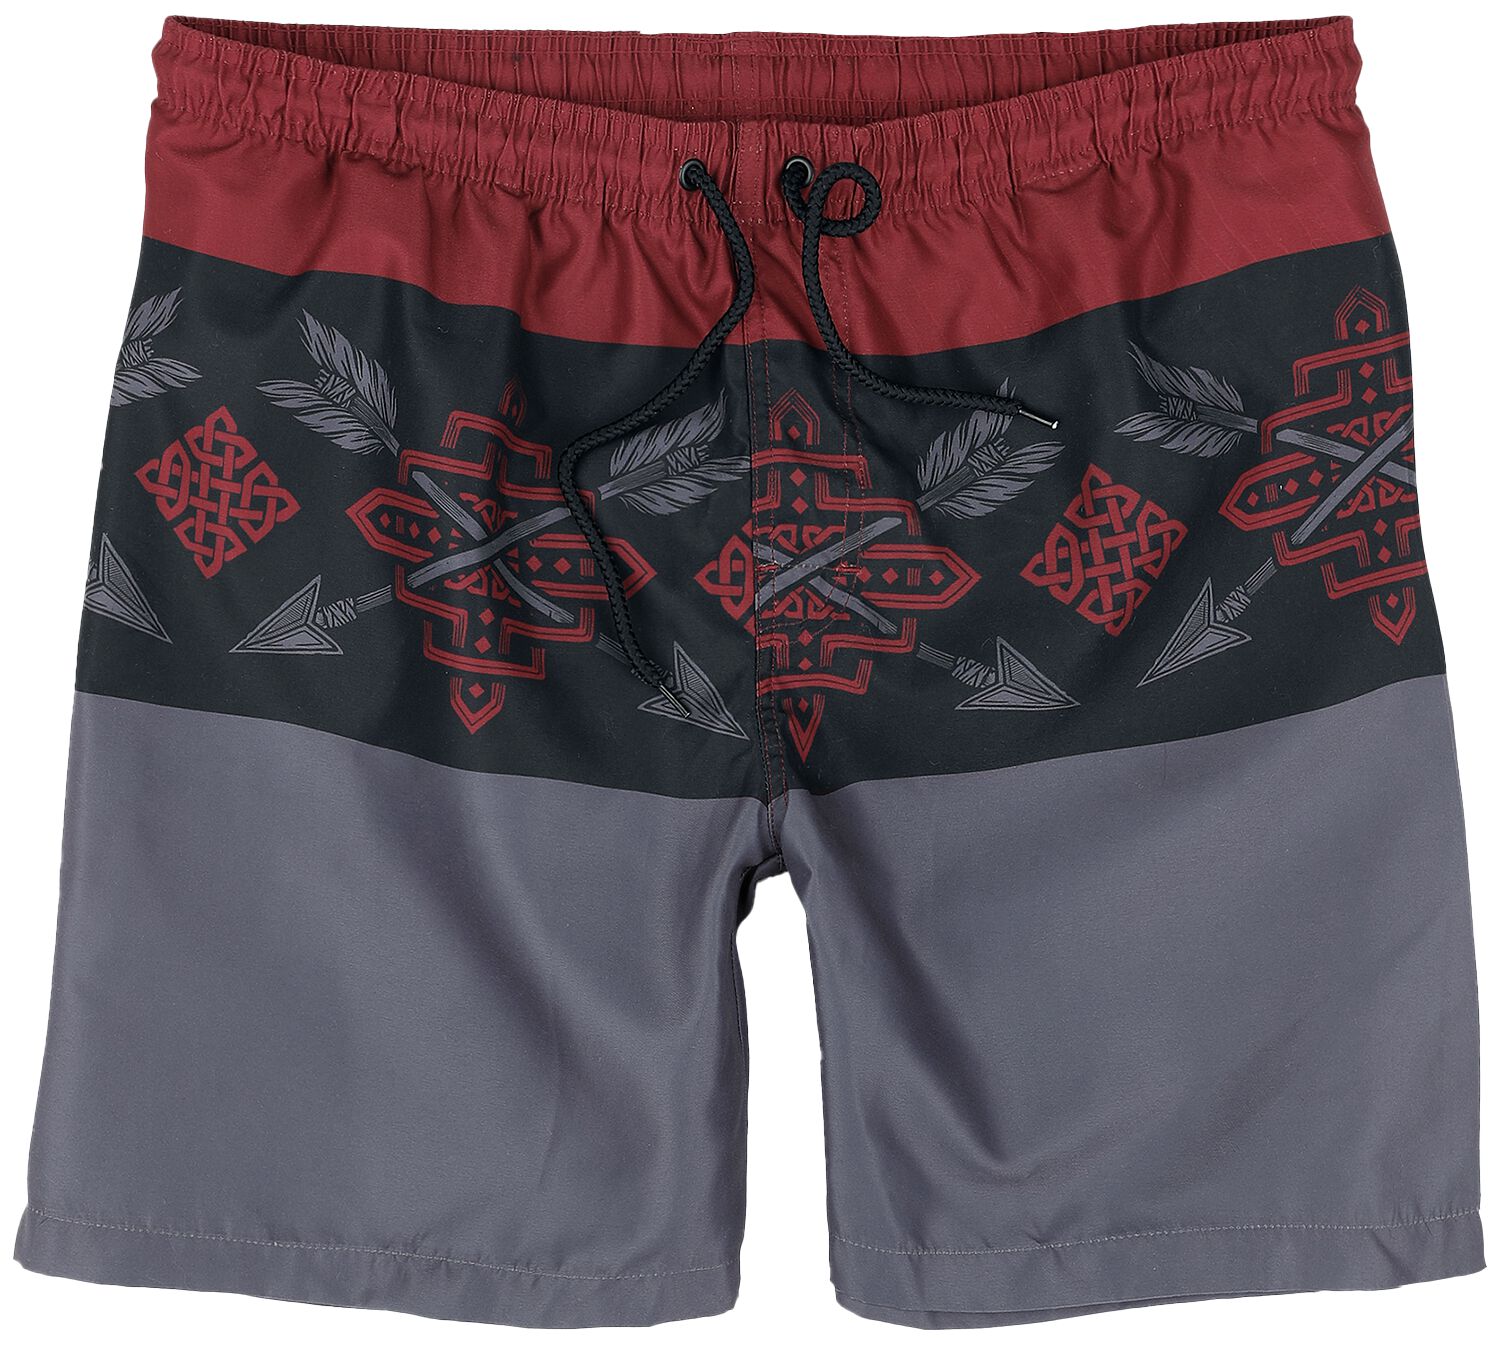 Black Premium by EMP Tricolor Swim Shorts with Arrow Print Badeshort rot schwarz in L